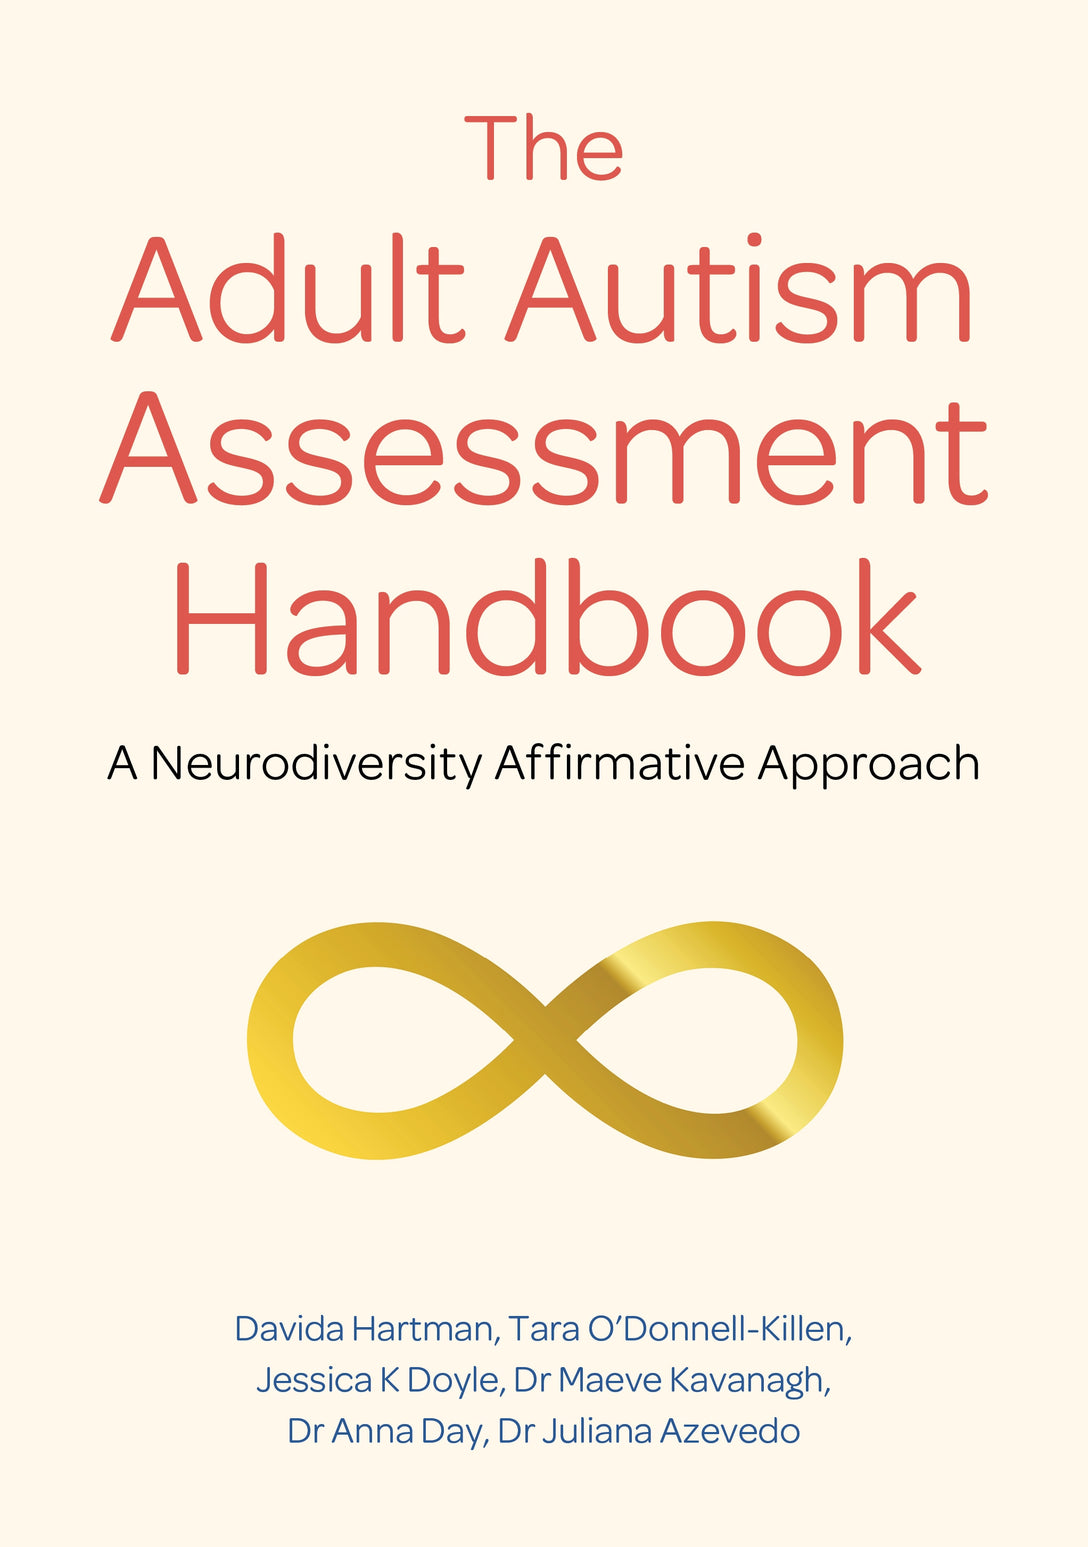 The Adult Autism Assessment Handbook by Davida Hartman, Tara O'Donnell-Killen, Jessica K Doyle, Dr Maeve Kavanagh, Dr Anna Day, Dr Juliana Azevedo